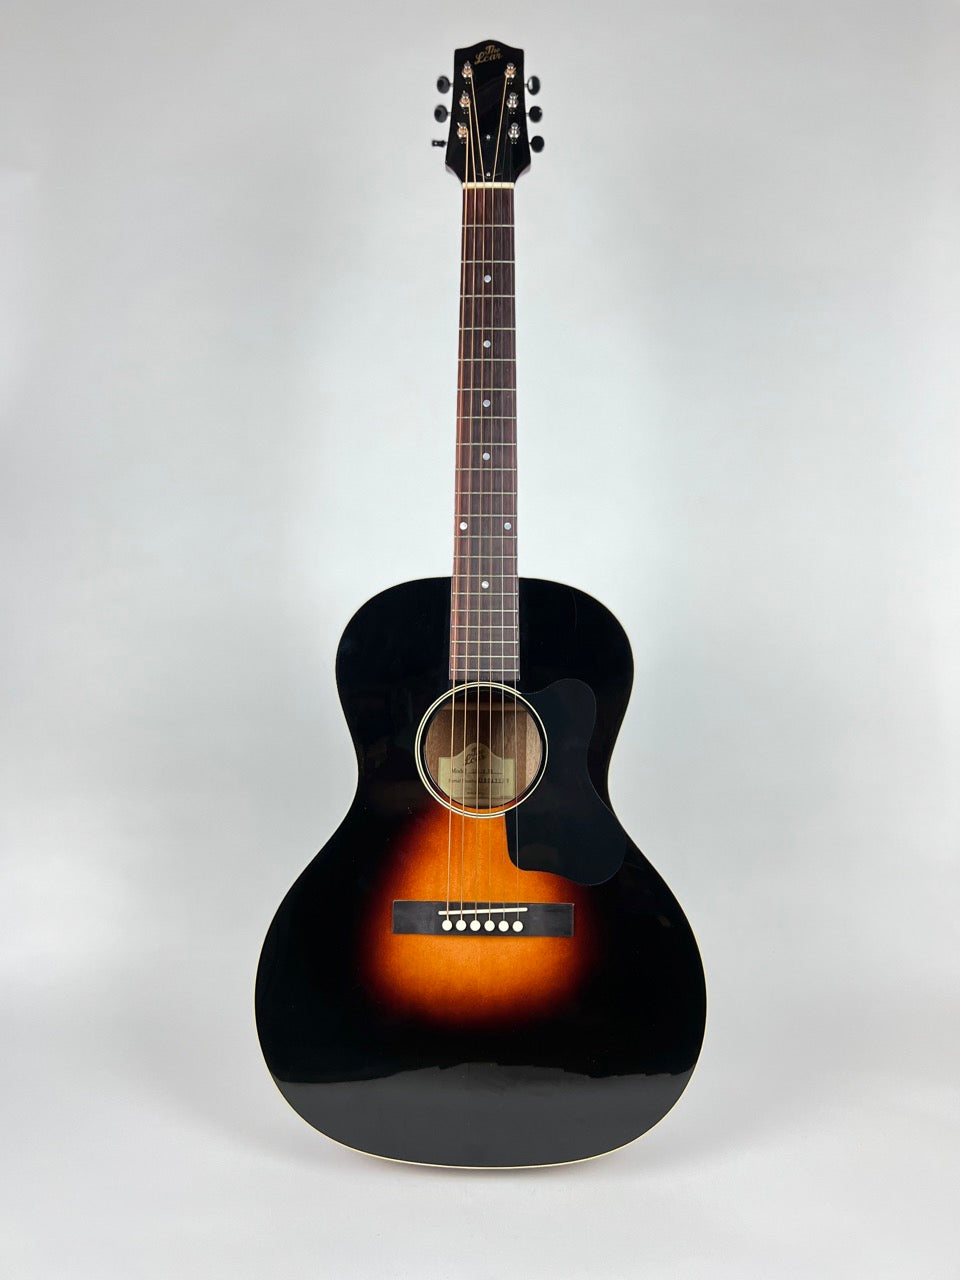 The Loar L018VS Guitar